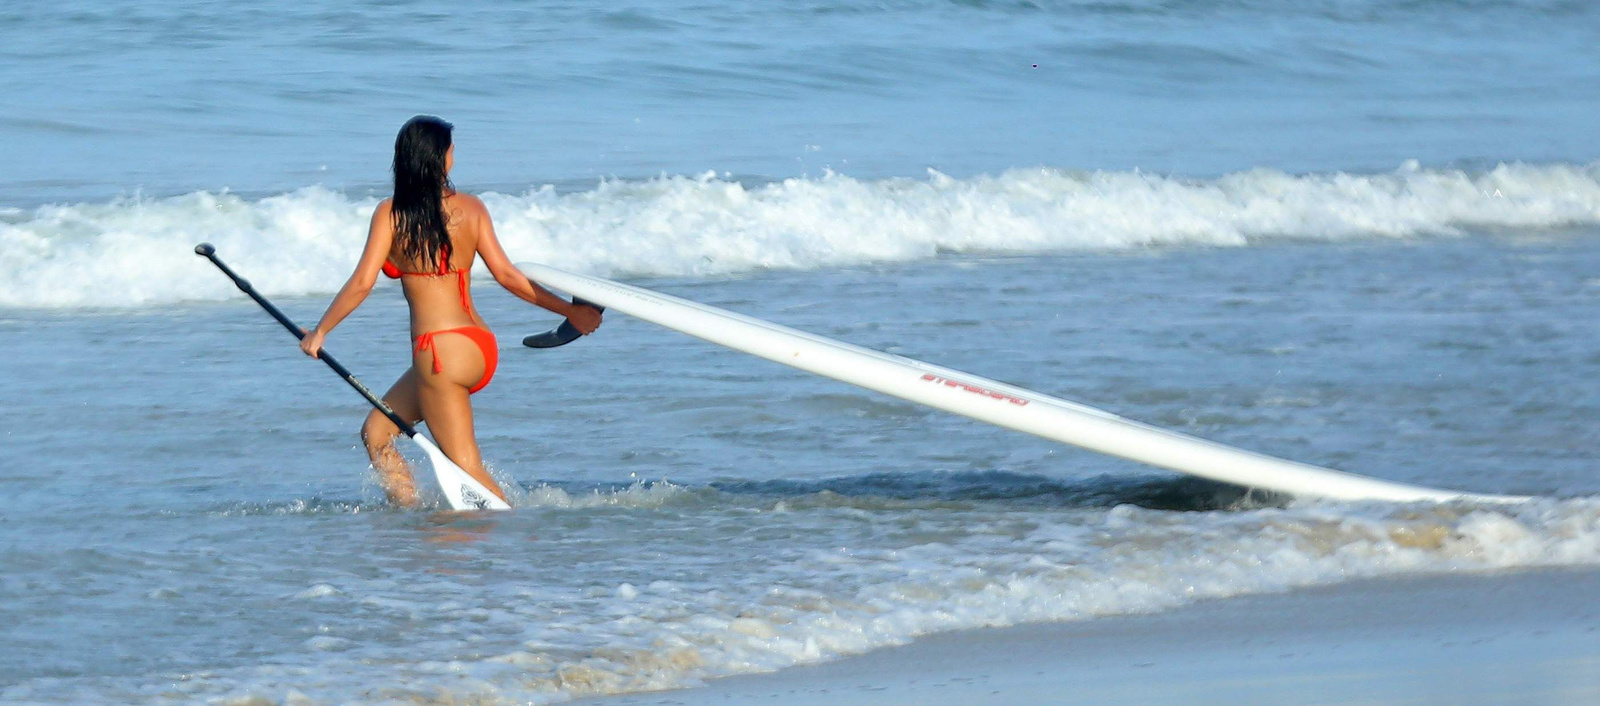 Ким Кардашьян покоряет серфинг в алом бикини